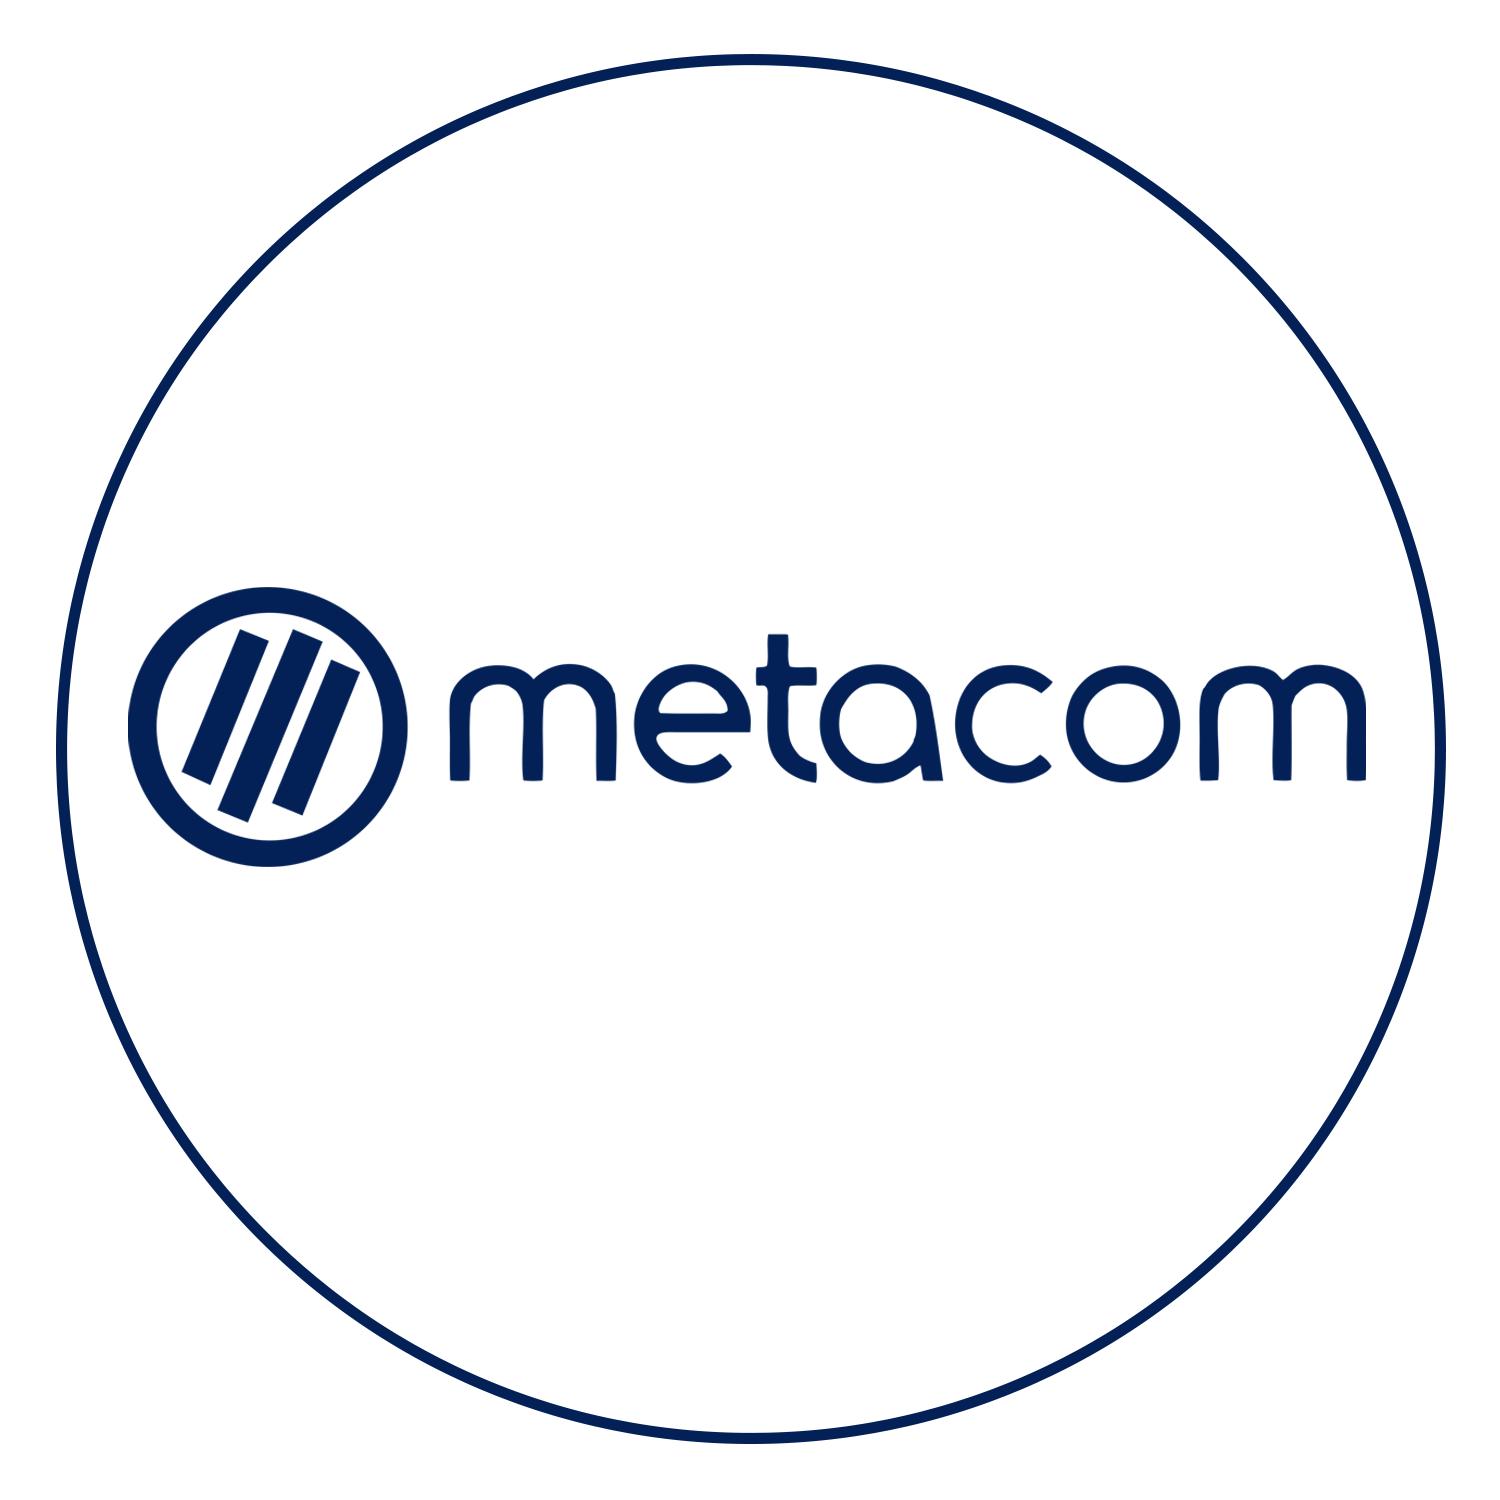 Metacom BPO Industries